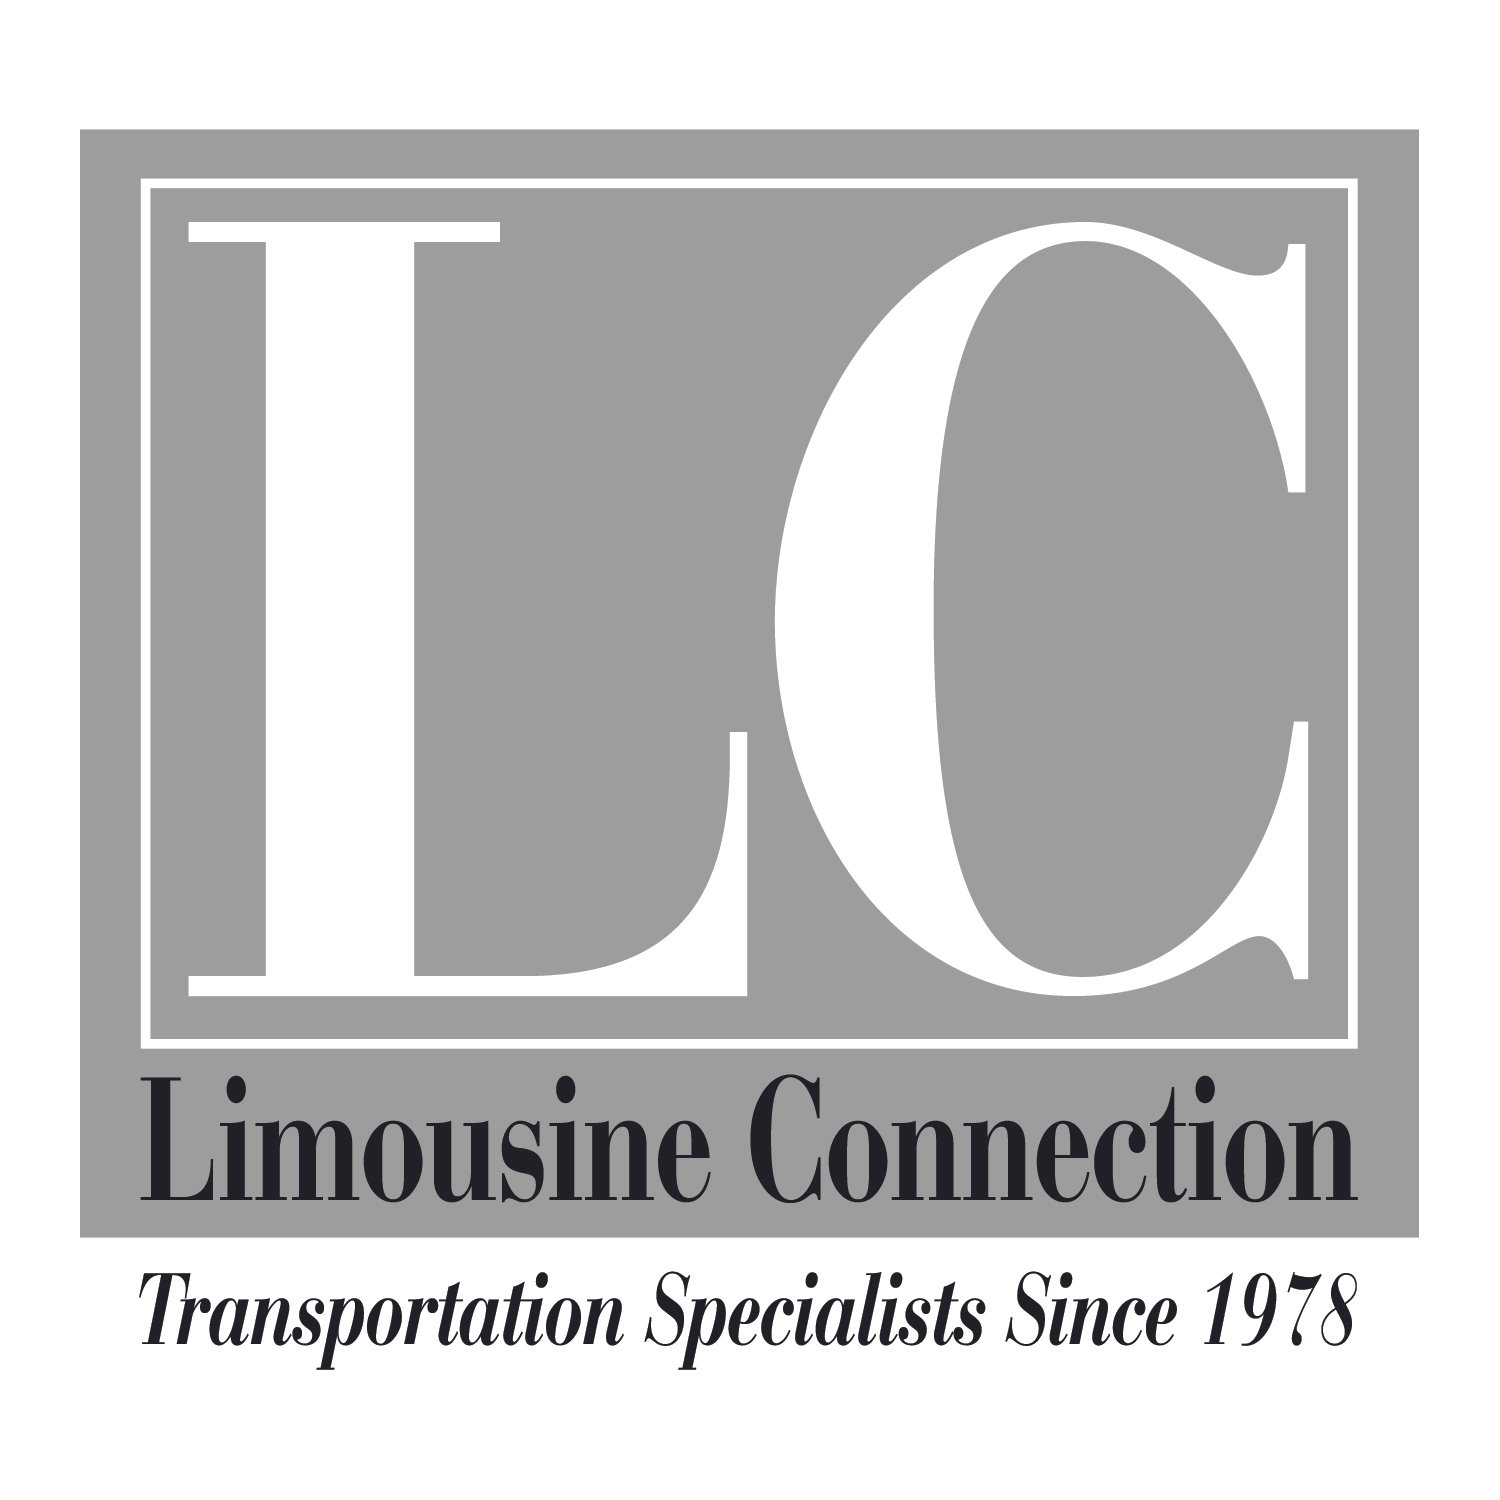 Limousine Connection FINAL logo.jpg